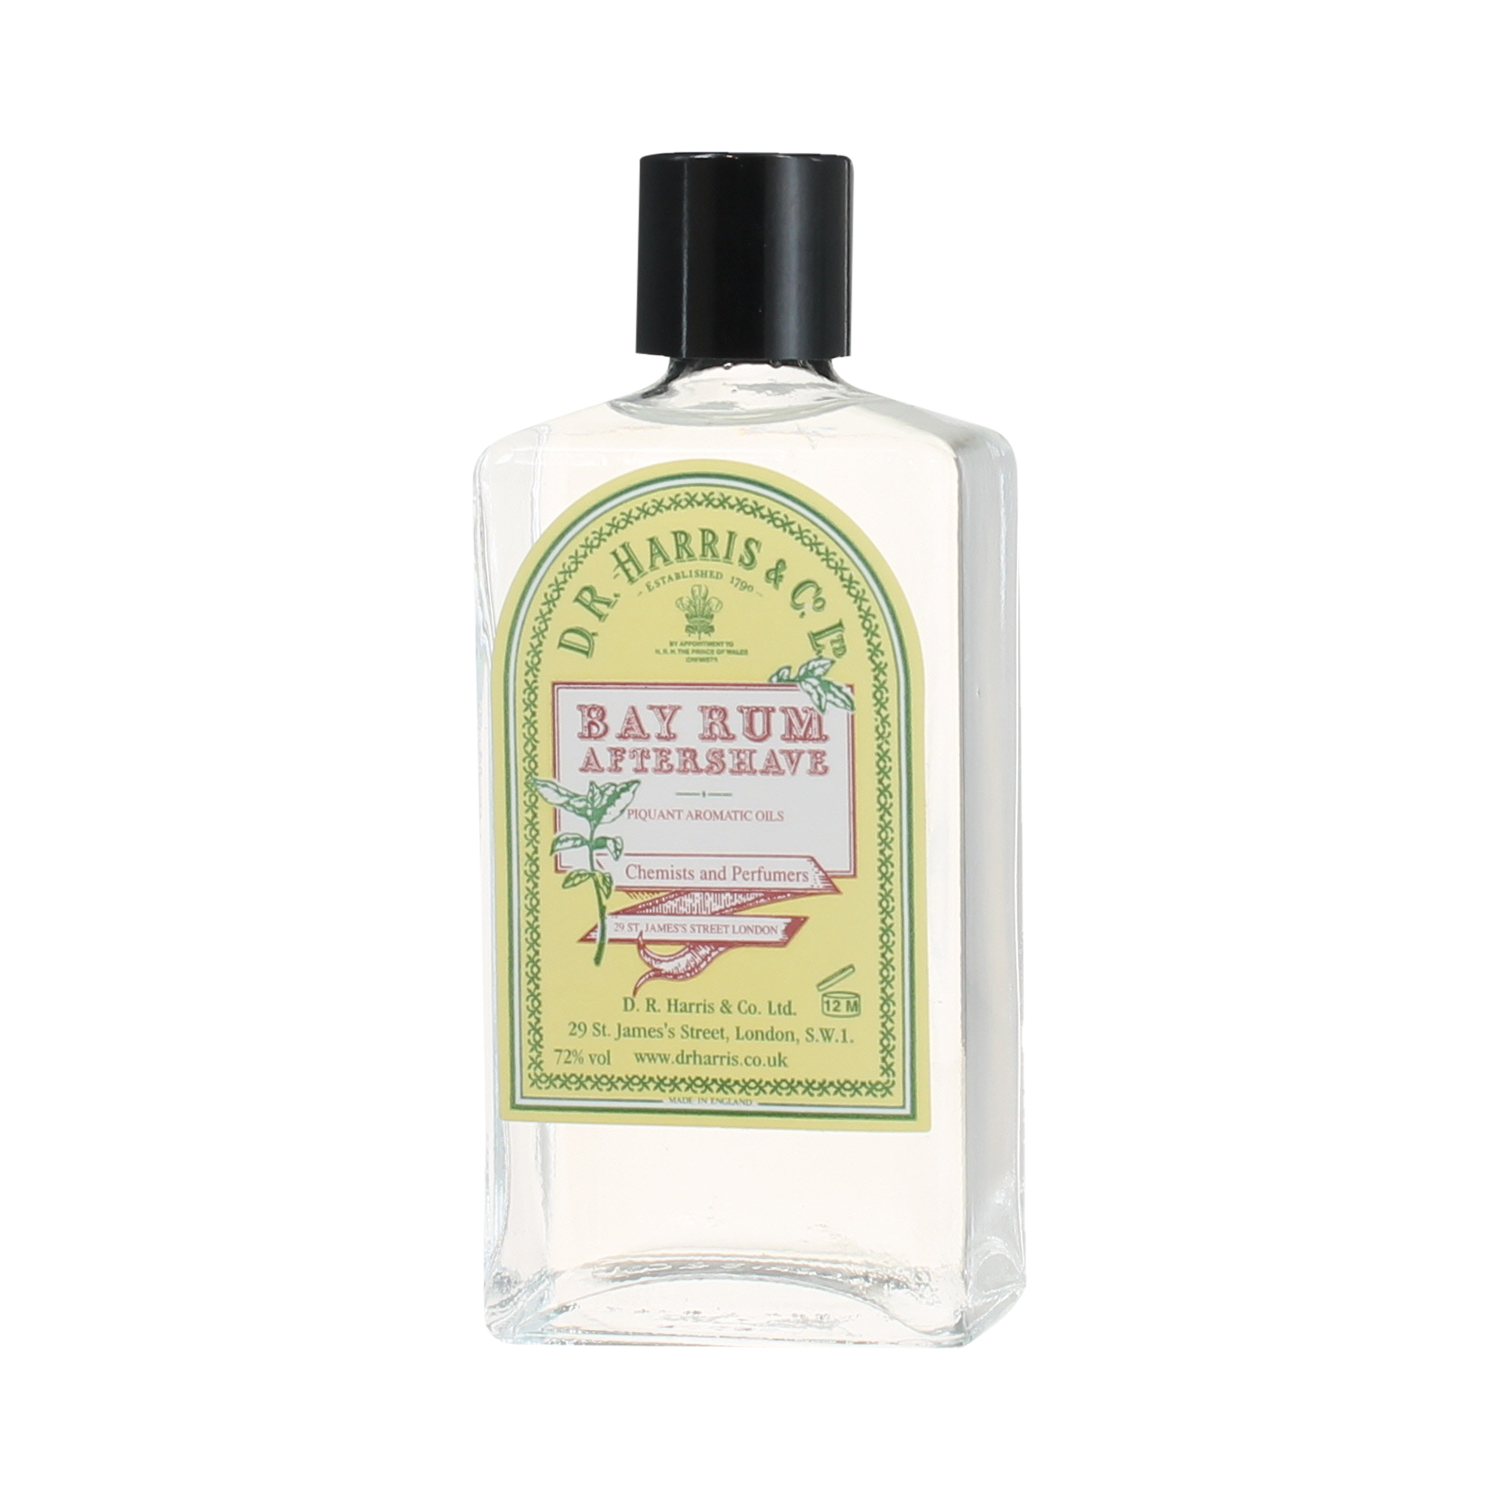 D.R. Harris - Bay Rum - Aftershave